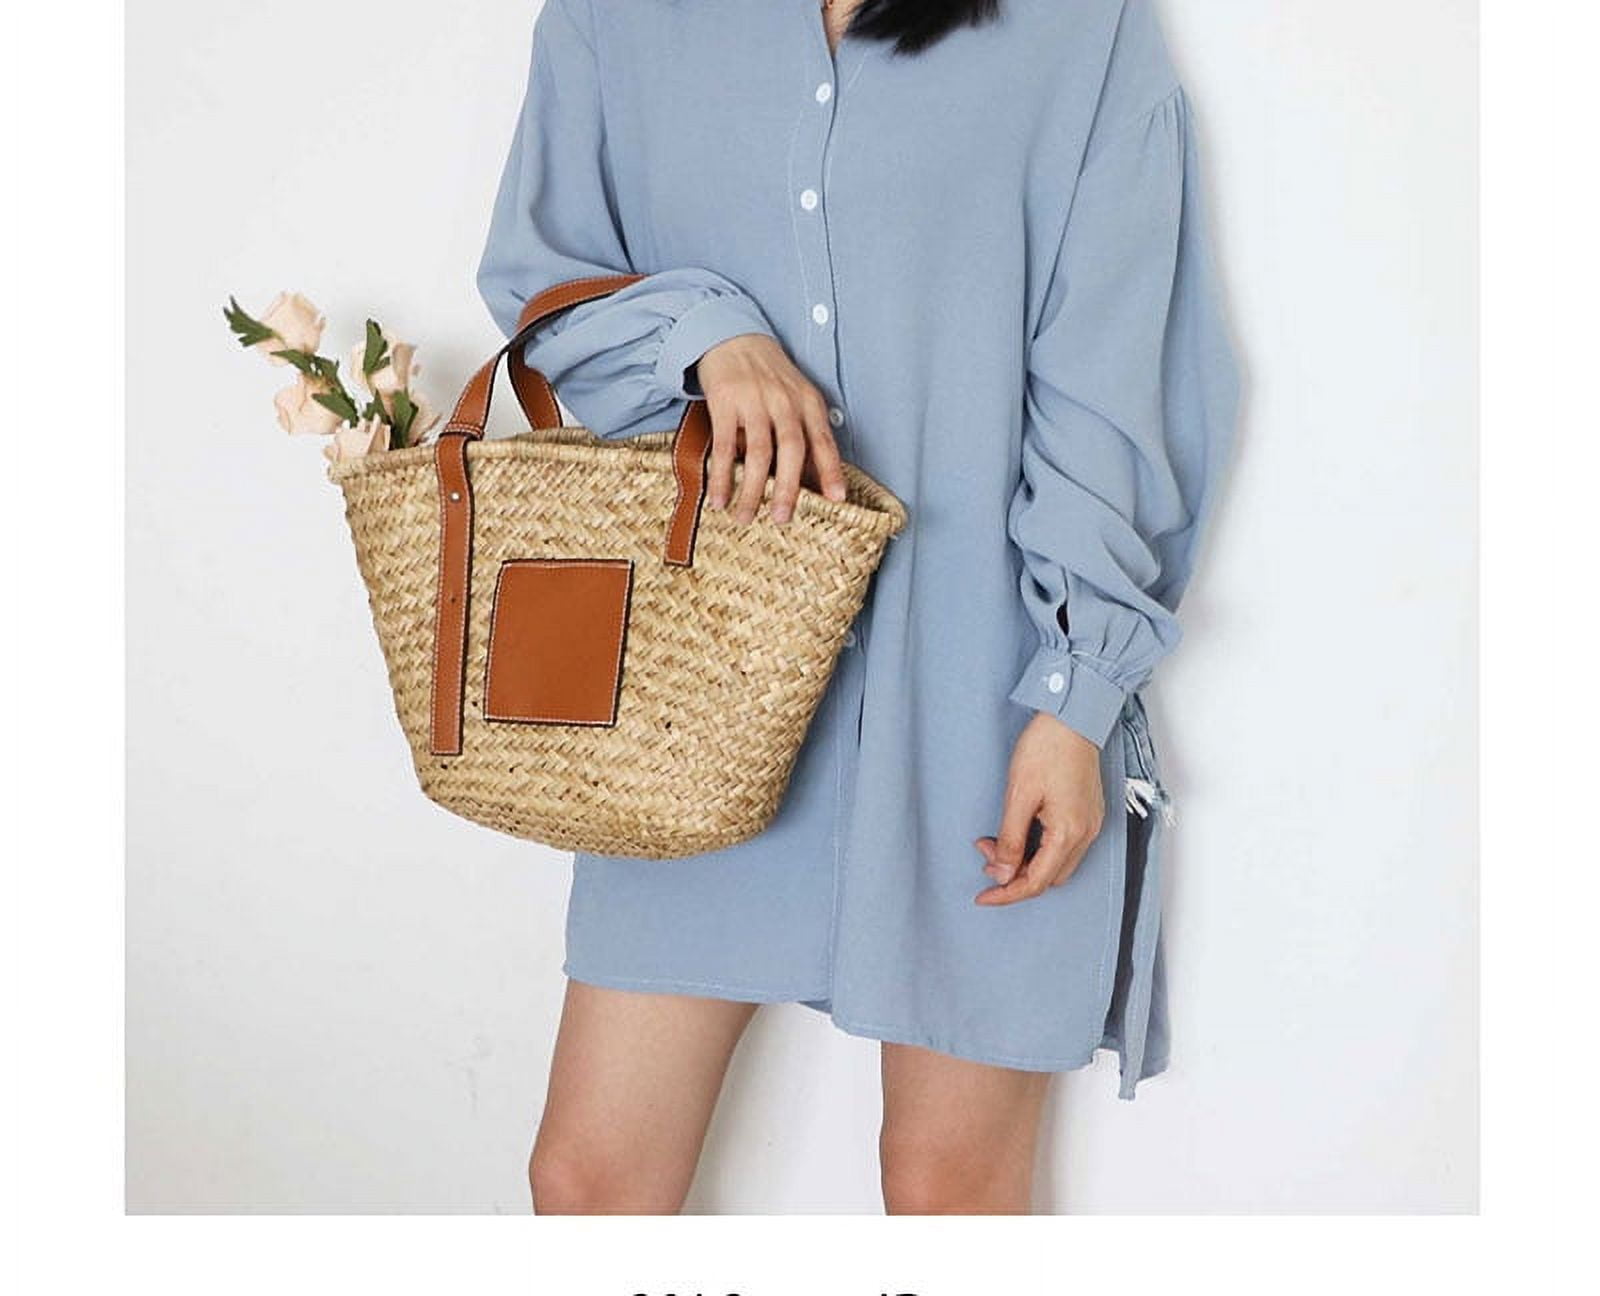 NAKYEOYO Women's Fashion Designer Beach Bag